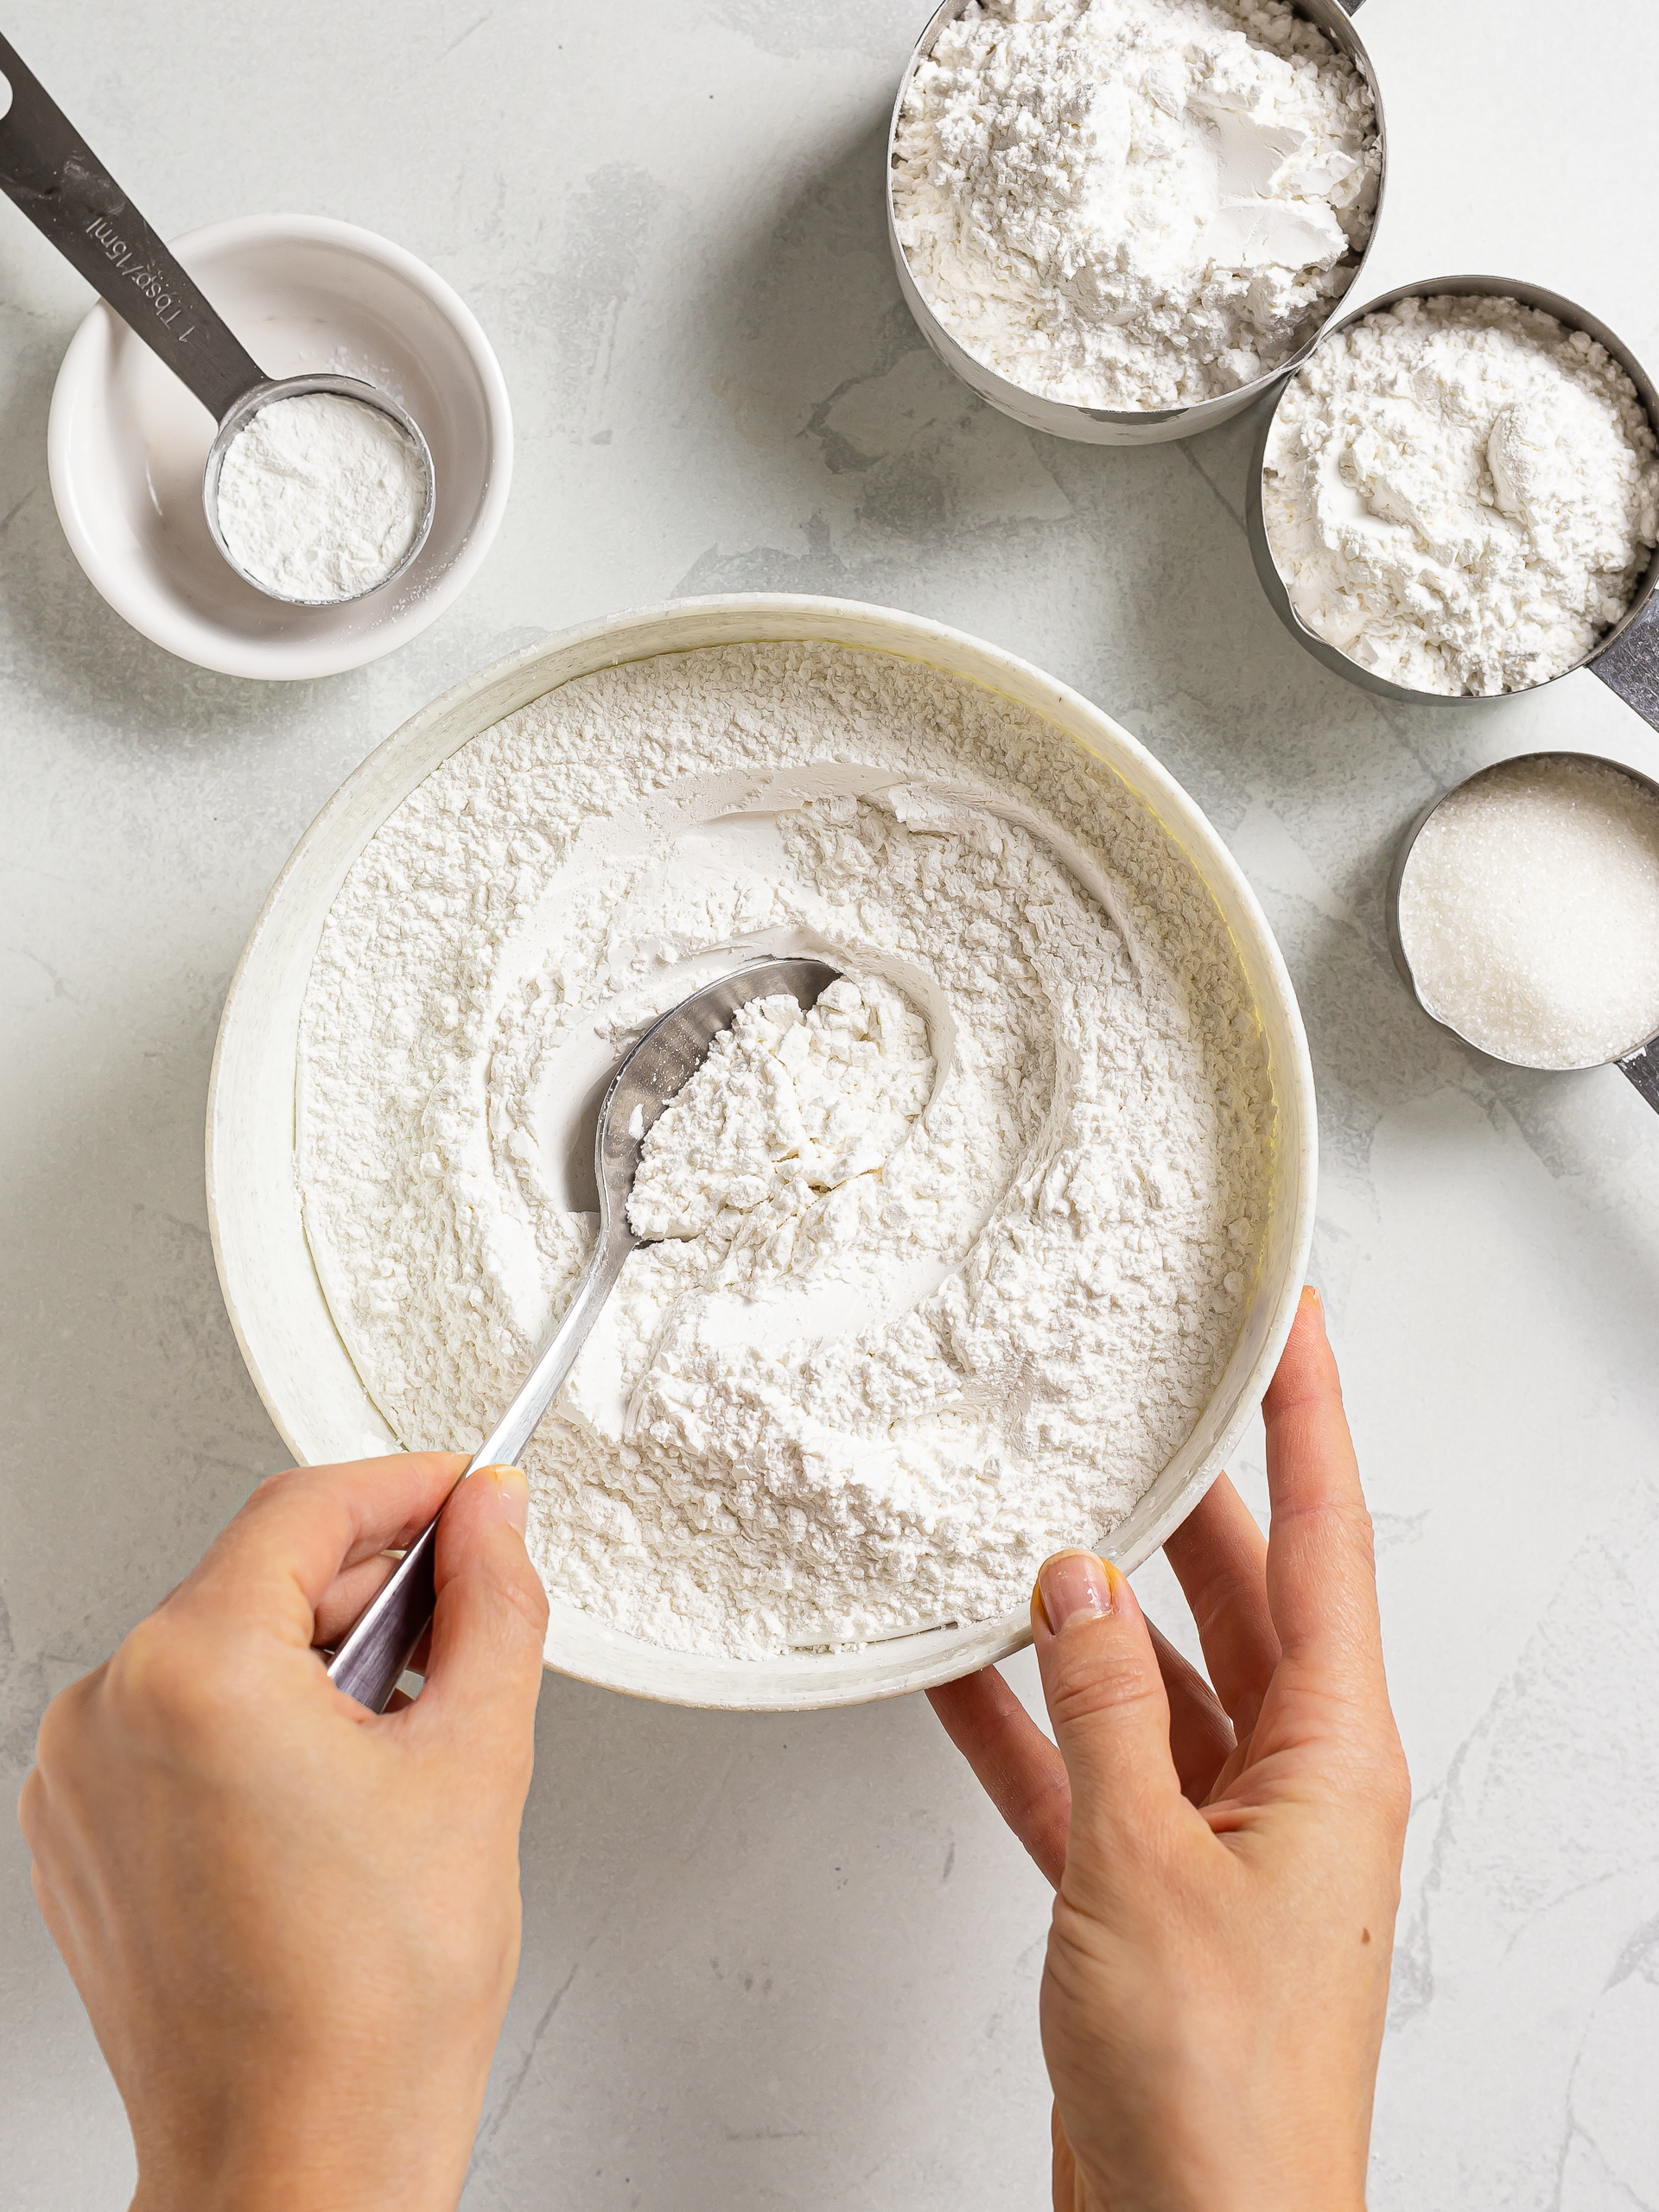 mochi flour and rice flour mix for mochi bread